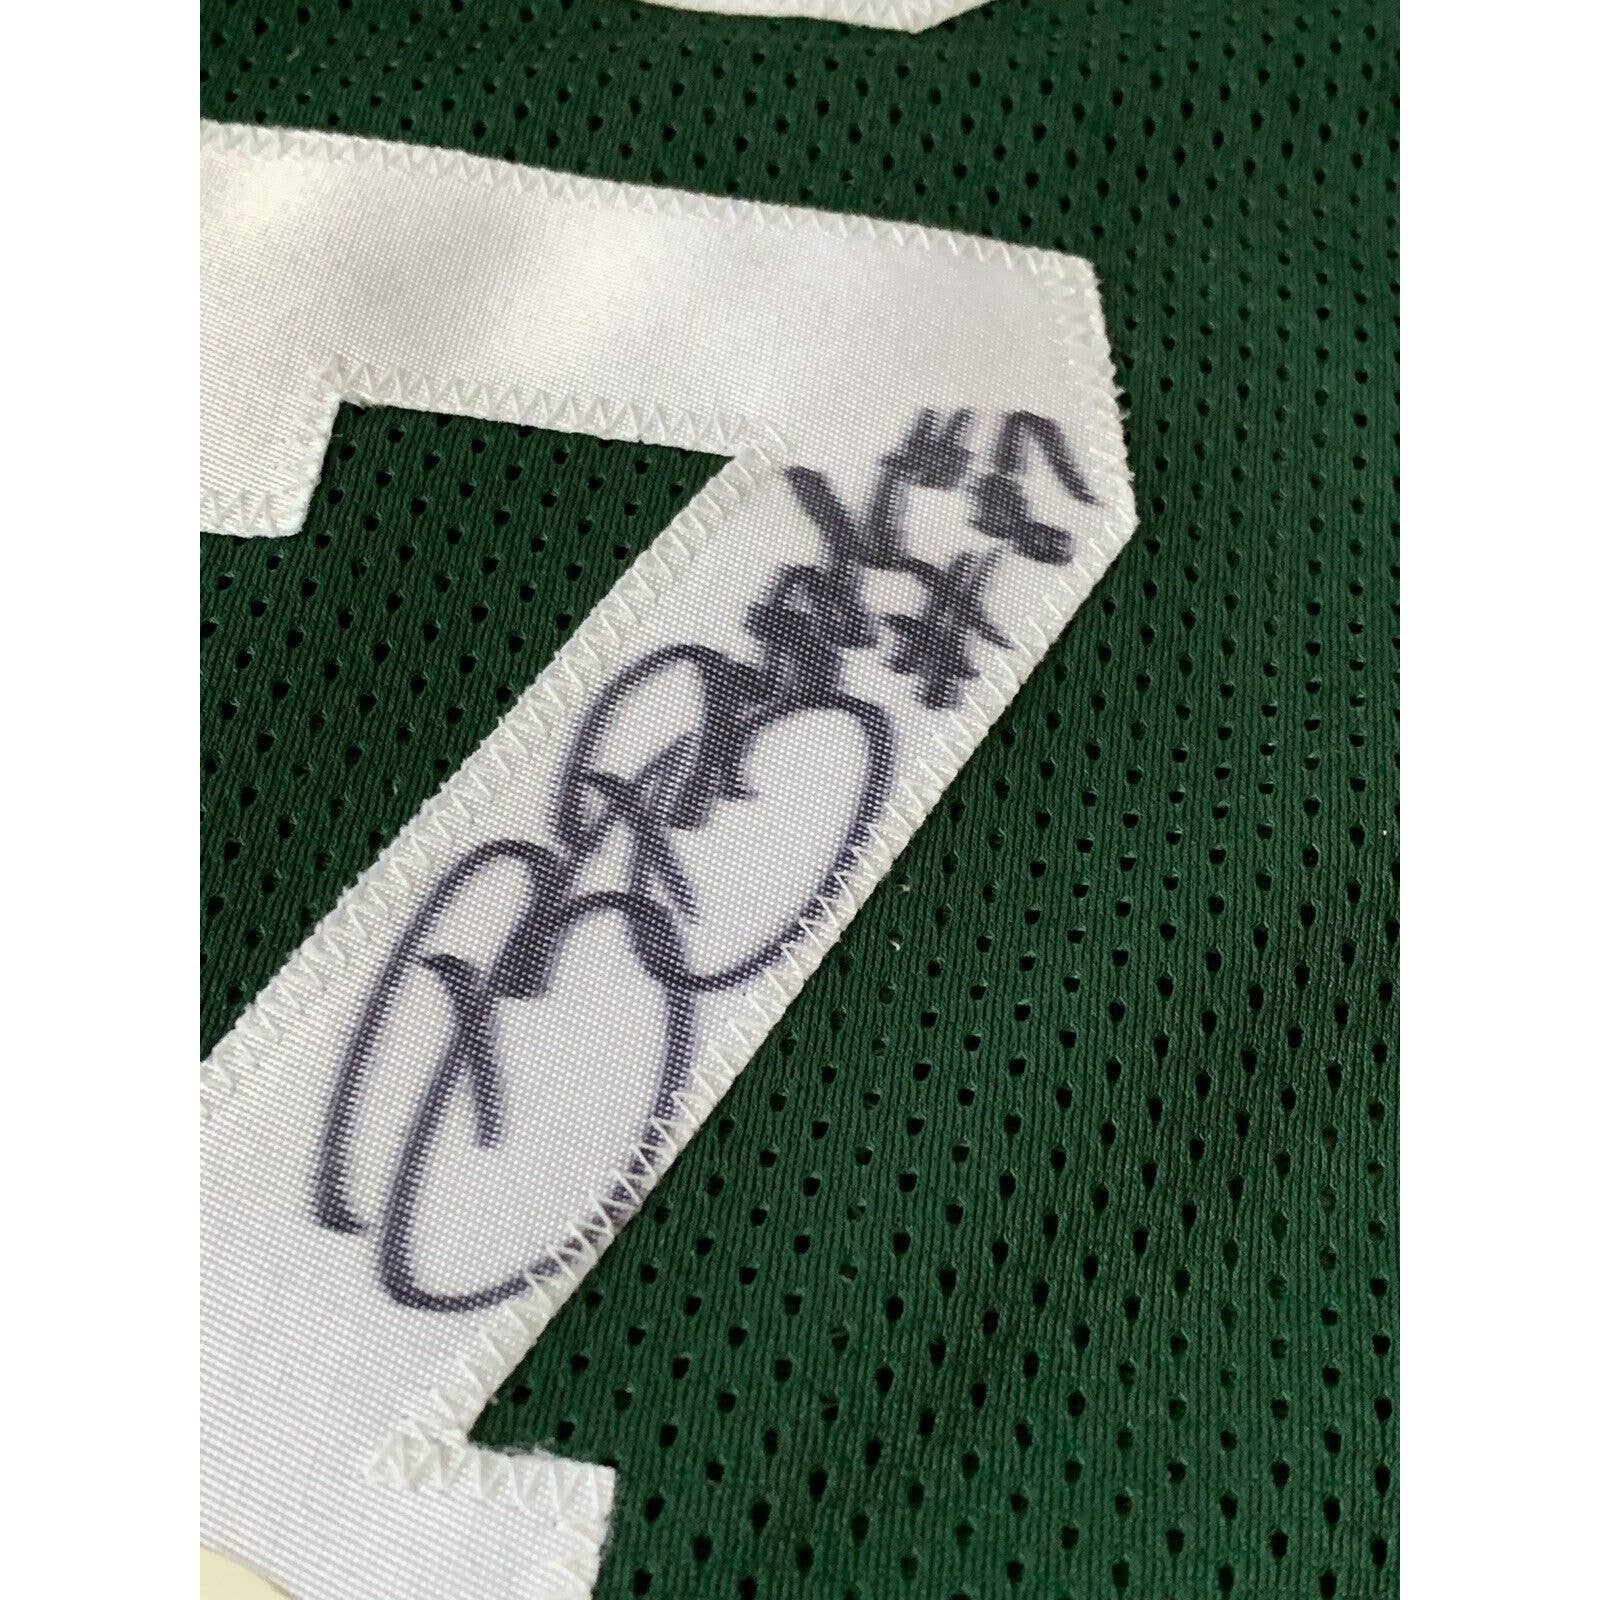 Robert Brooks Autographed/Signed Jersey JSA COA Green Bay Packers Legend - TreasuresEvolved